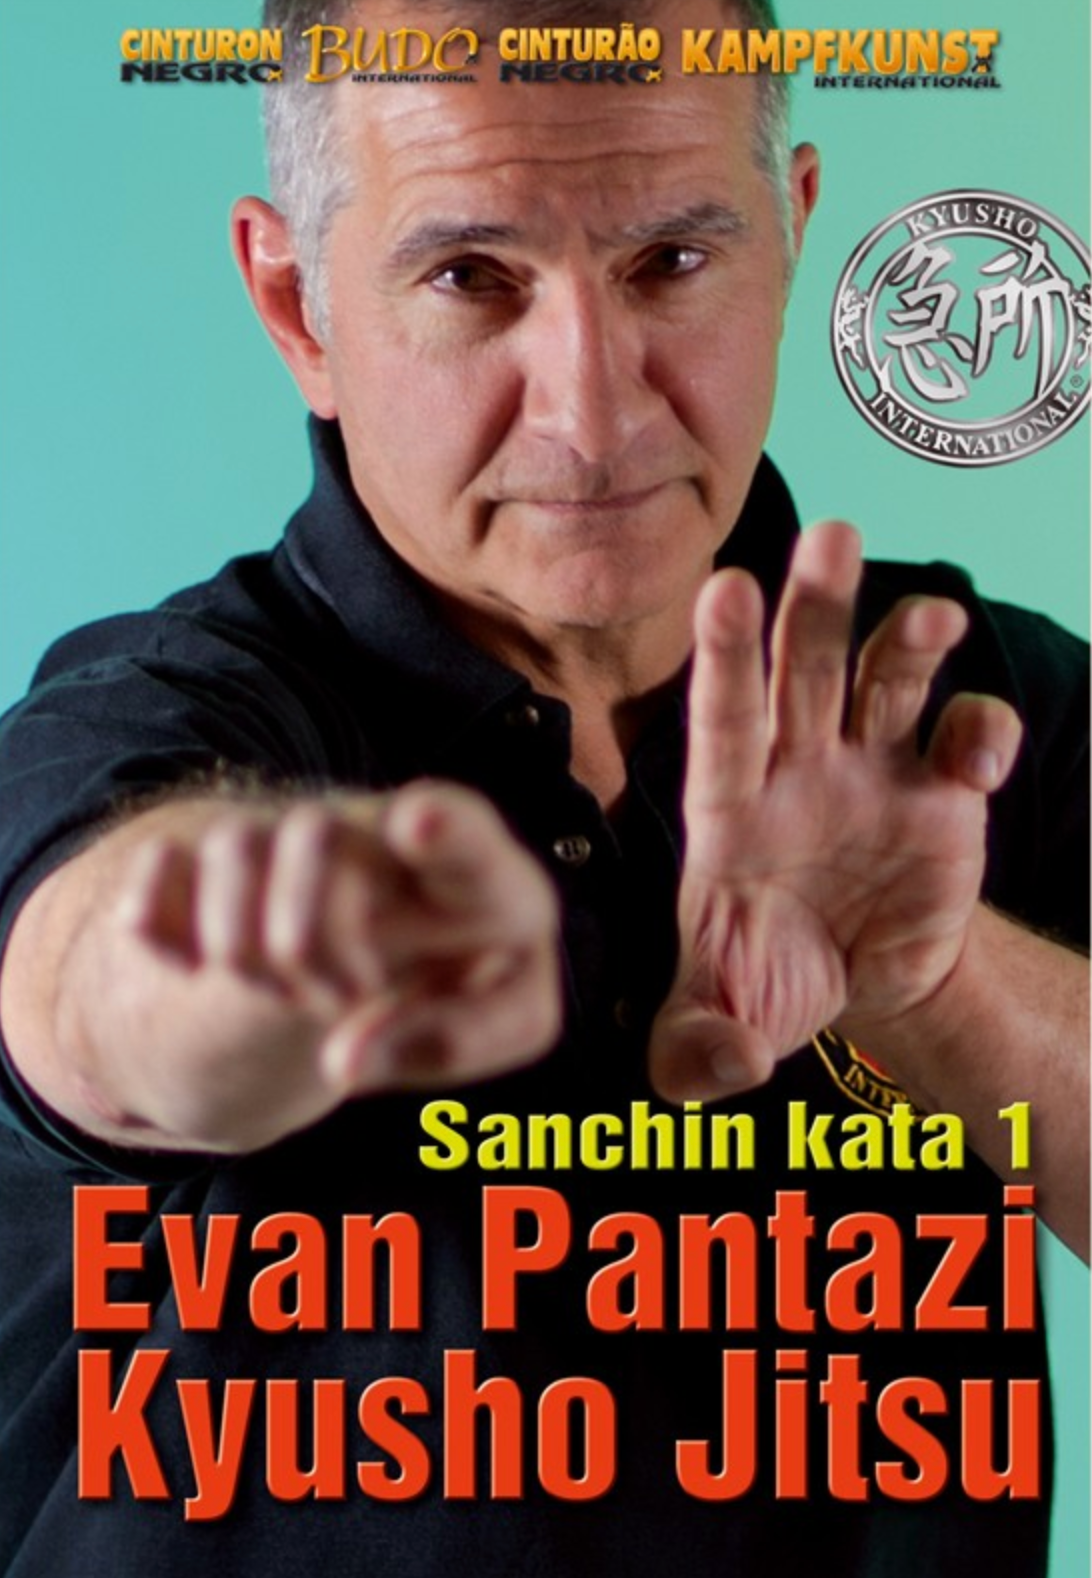 Kyusho Sanchin Kata Vol 1 DVD with Evan Pantazi - Budovideos Inc